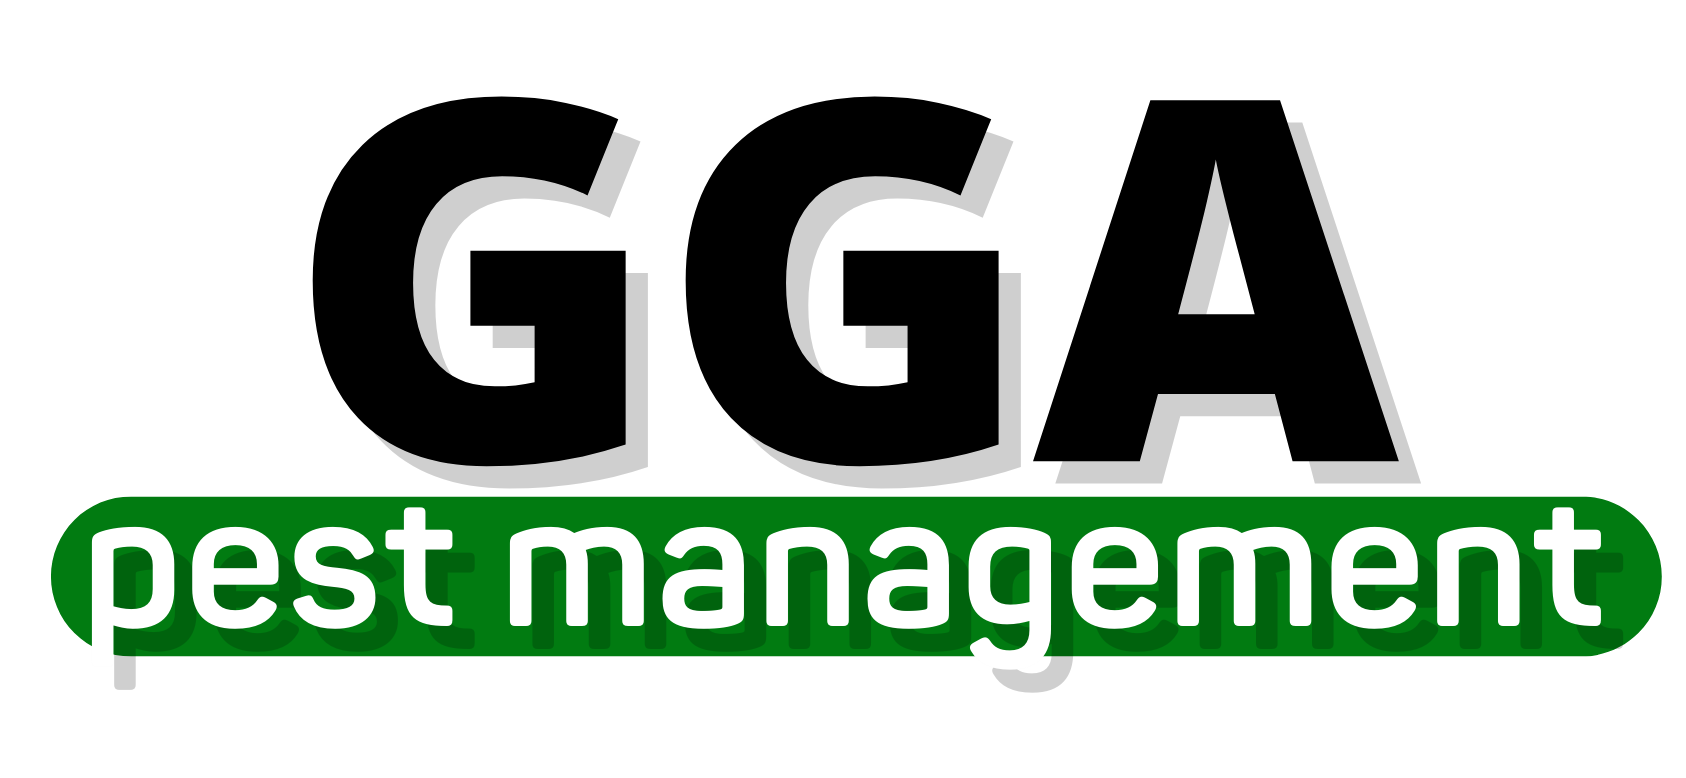 black and white gga pest management logo cropped